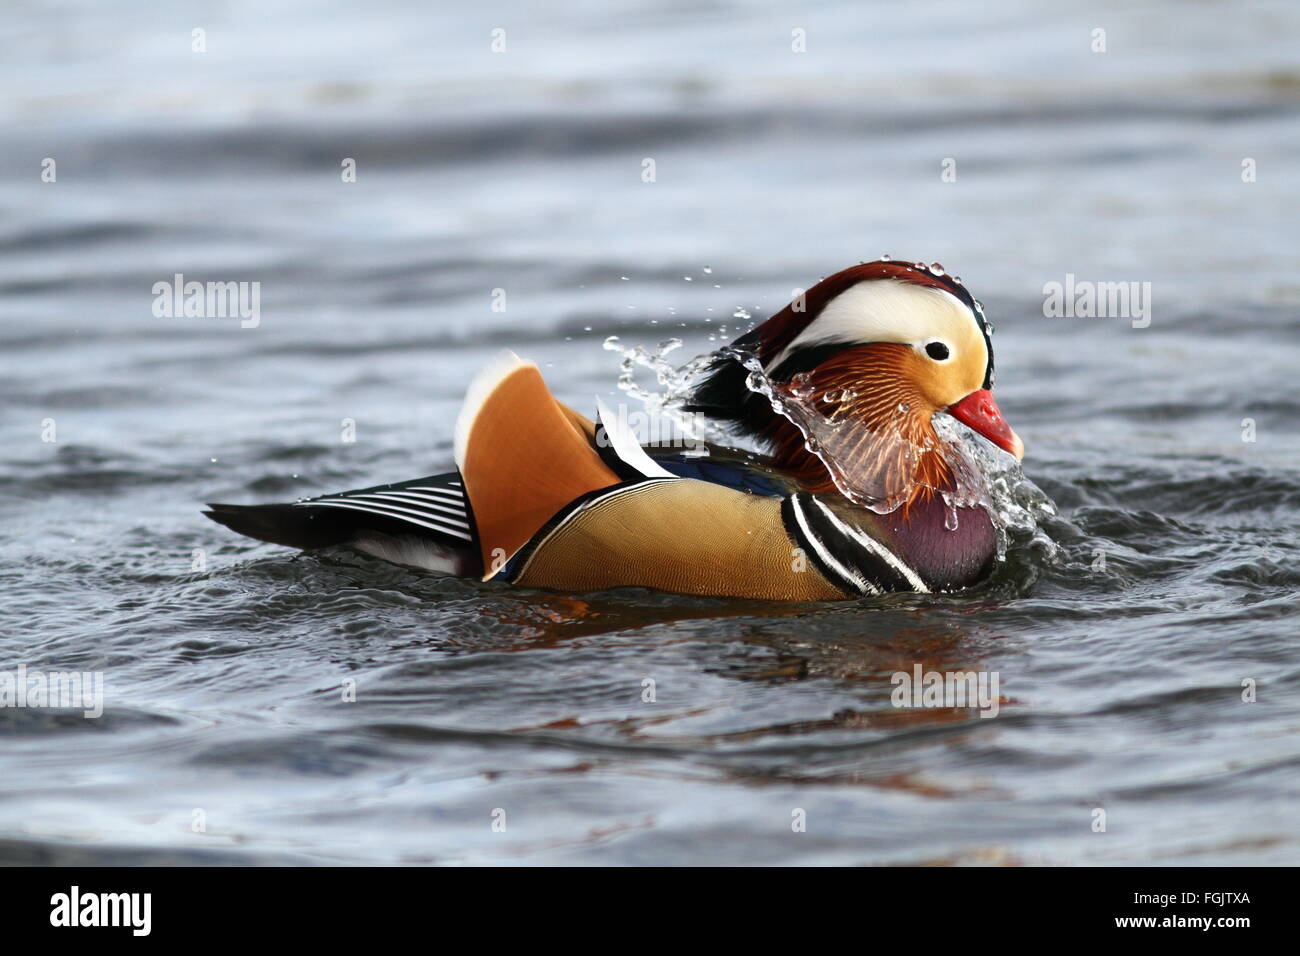 Mandarin duck / Colorful Bird bathing and splashing water Stock Photo